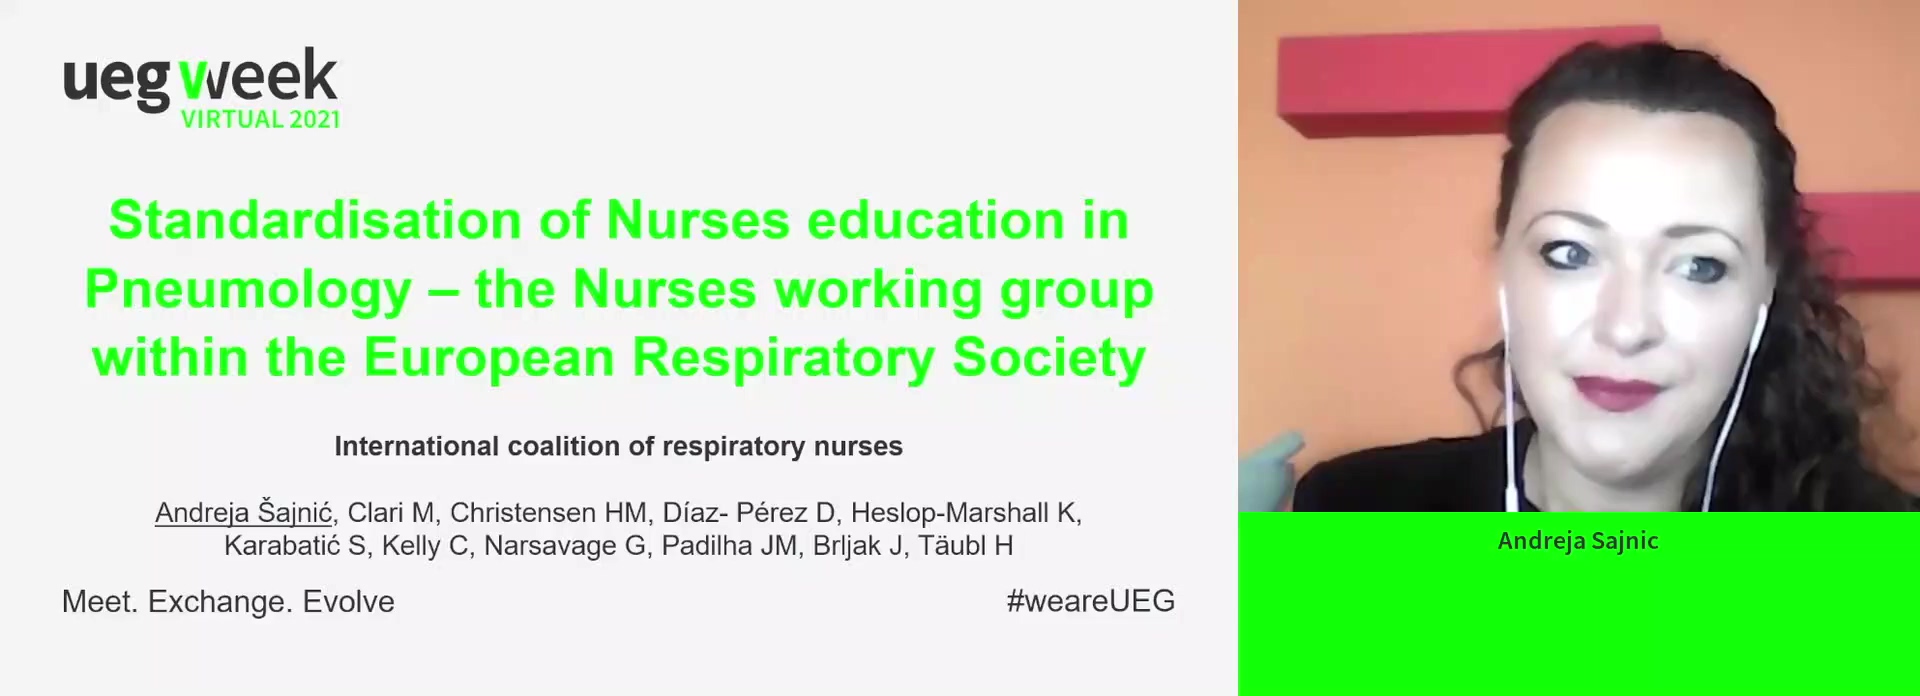 Standardisation of nurses education in pneumology: The nurses working group within the European Respiration Society